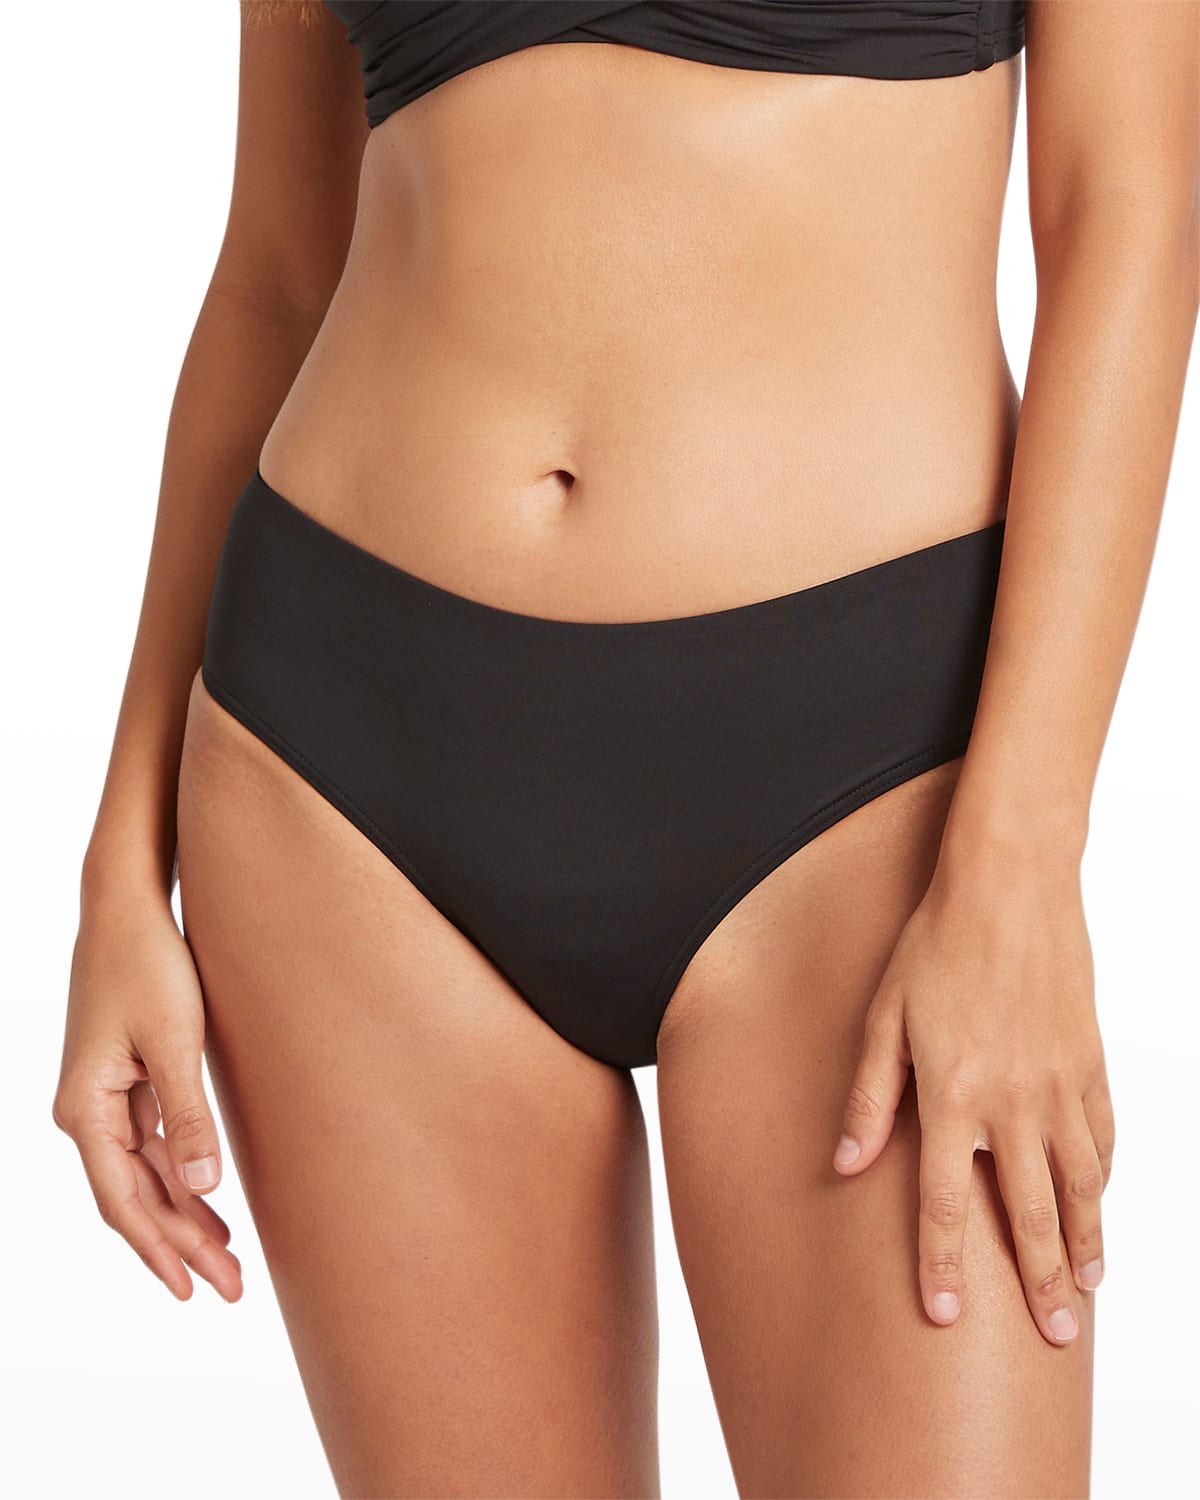 Freya Deco Bikini Brief Bottoms Pant 3871 New Womens Swimwear